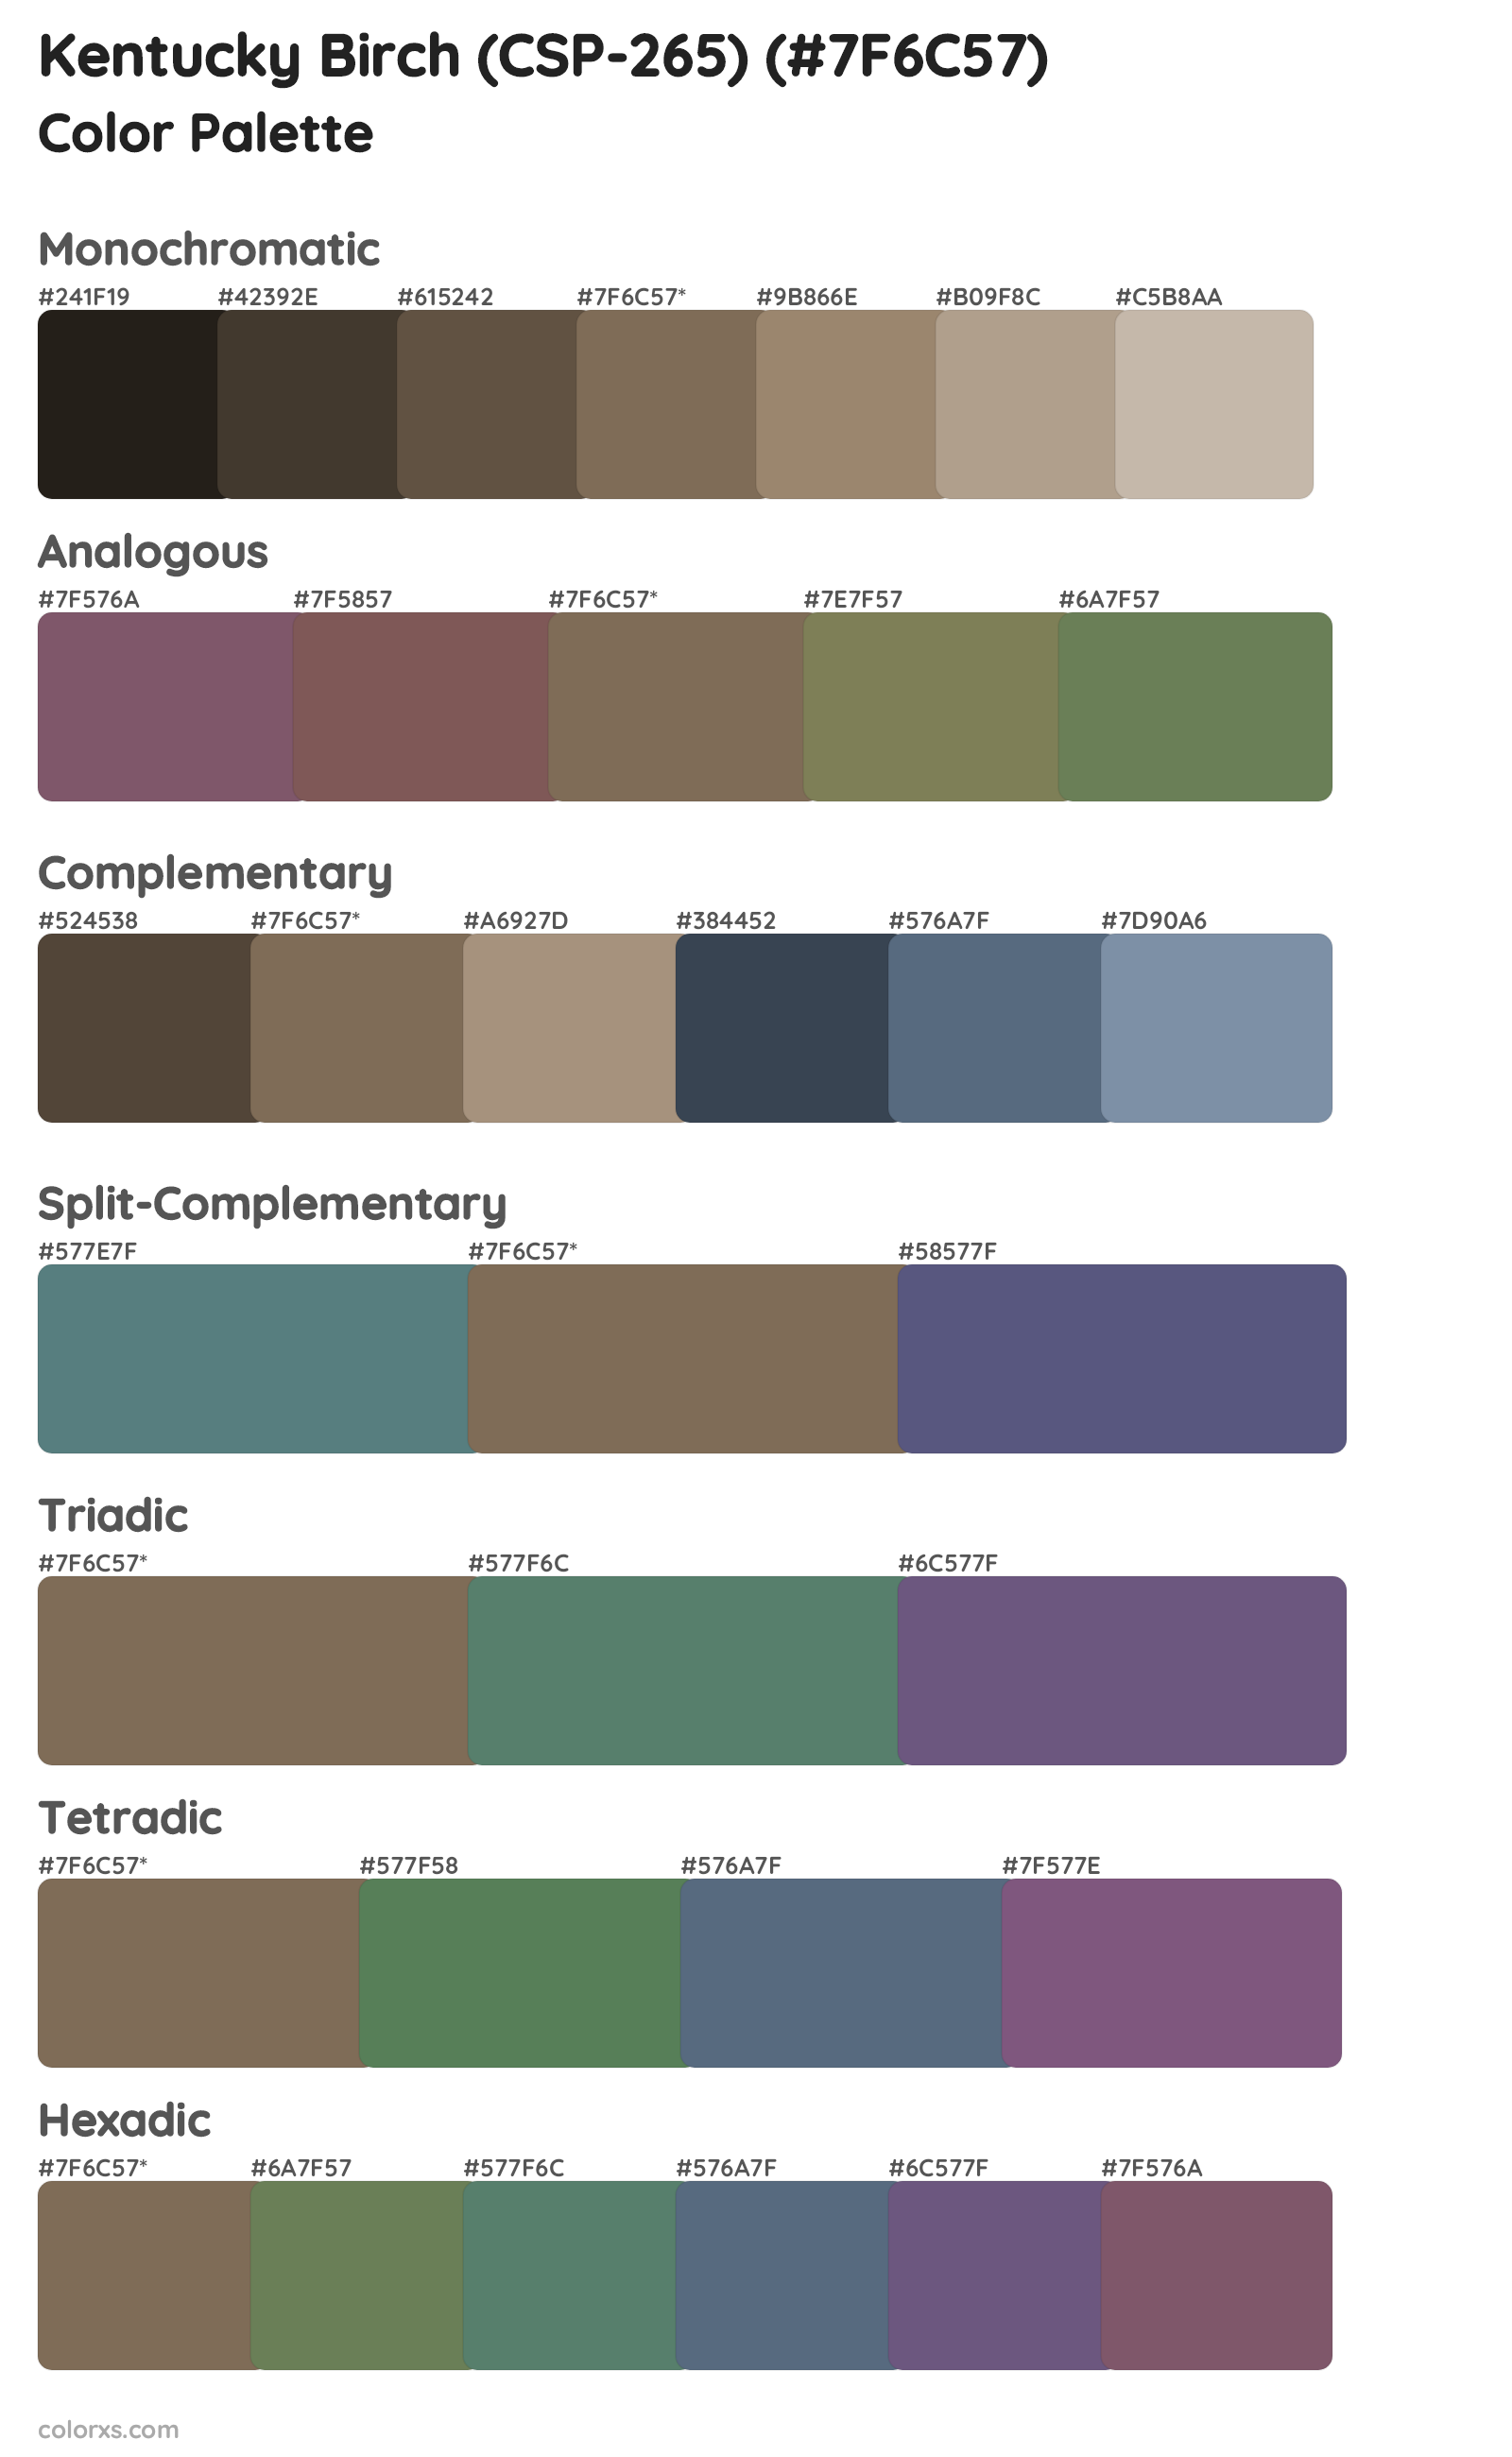 Kentucky Birch (CSP-265) Color Scheme Palettes